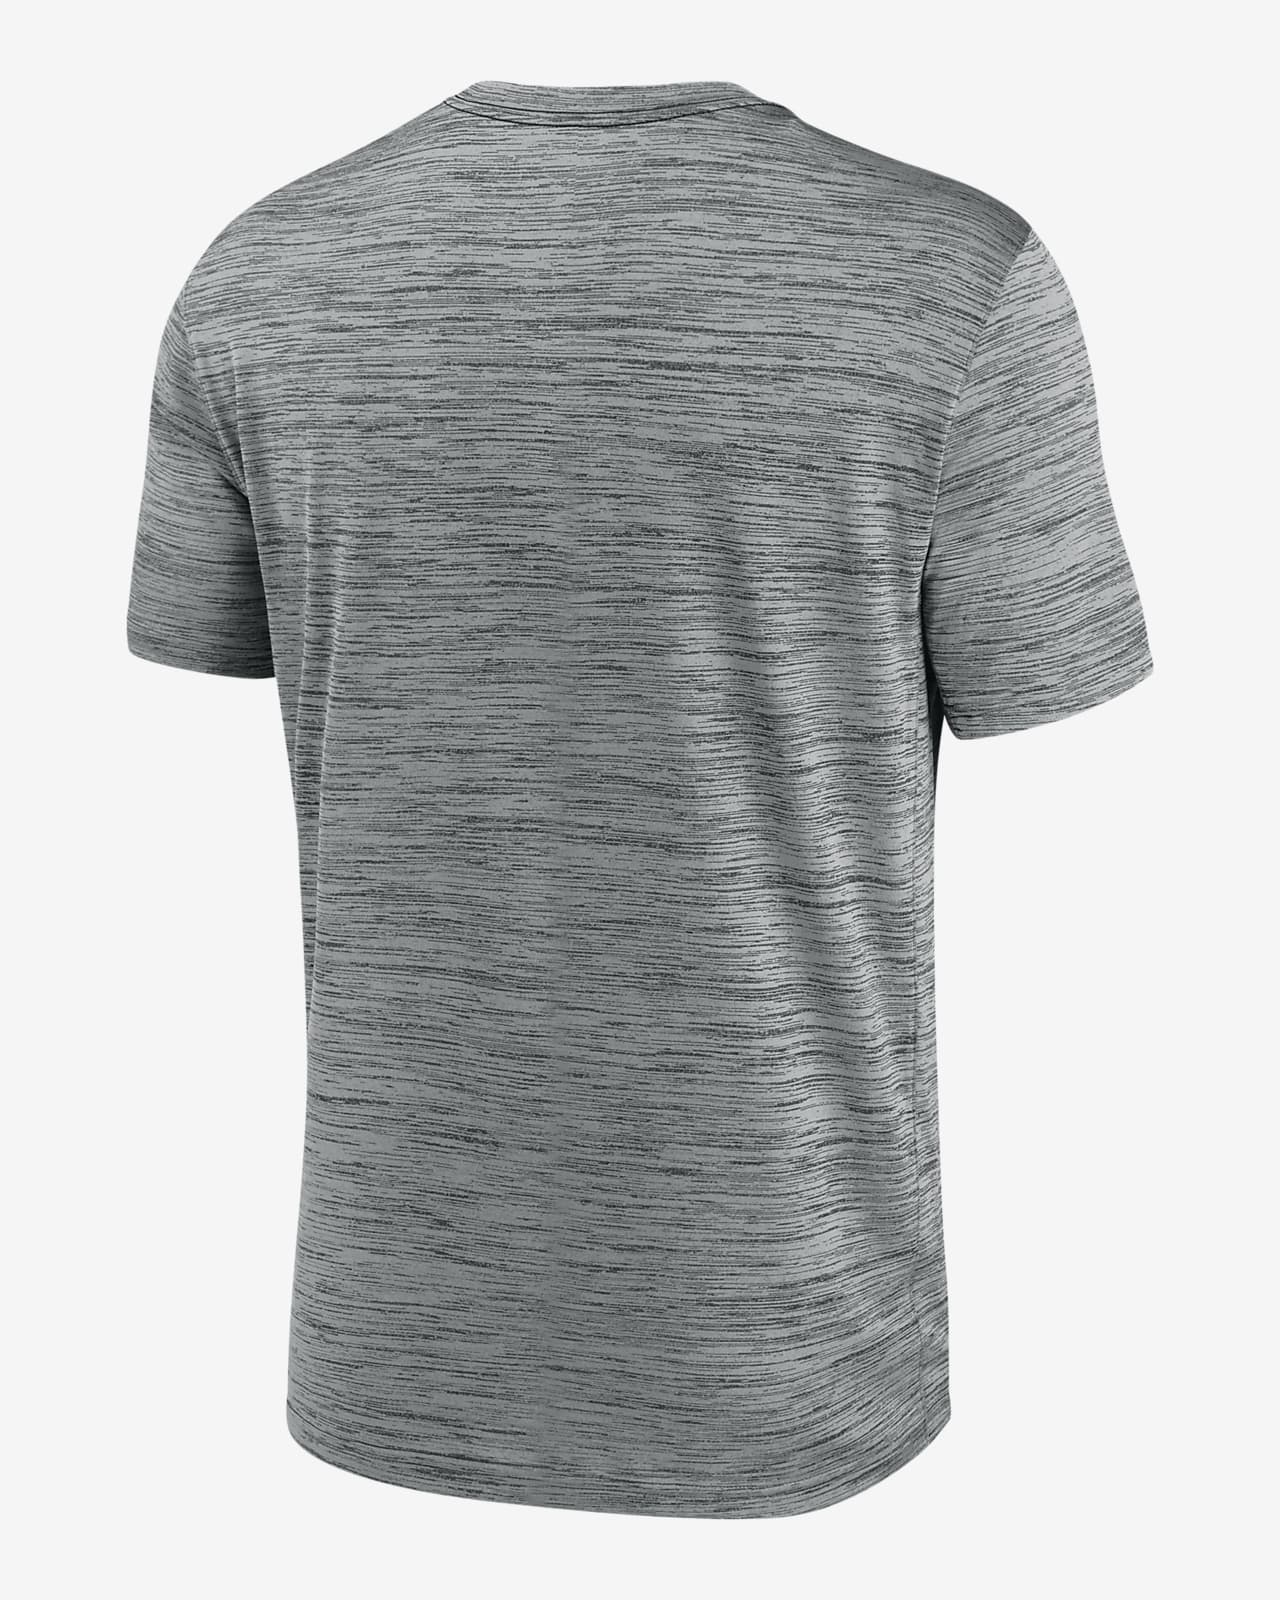 New Men's Nike Houston Astros Dri Fit T-Shirt Size XL